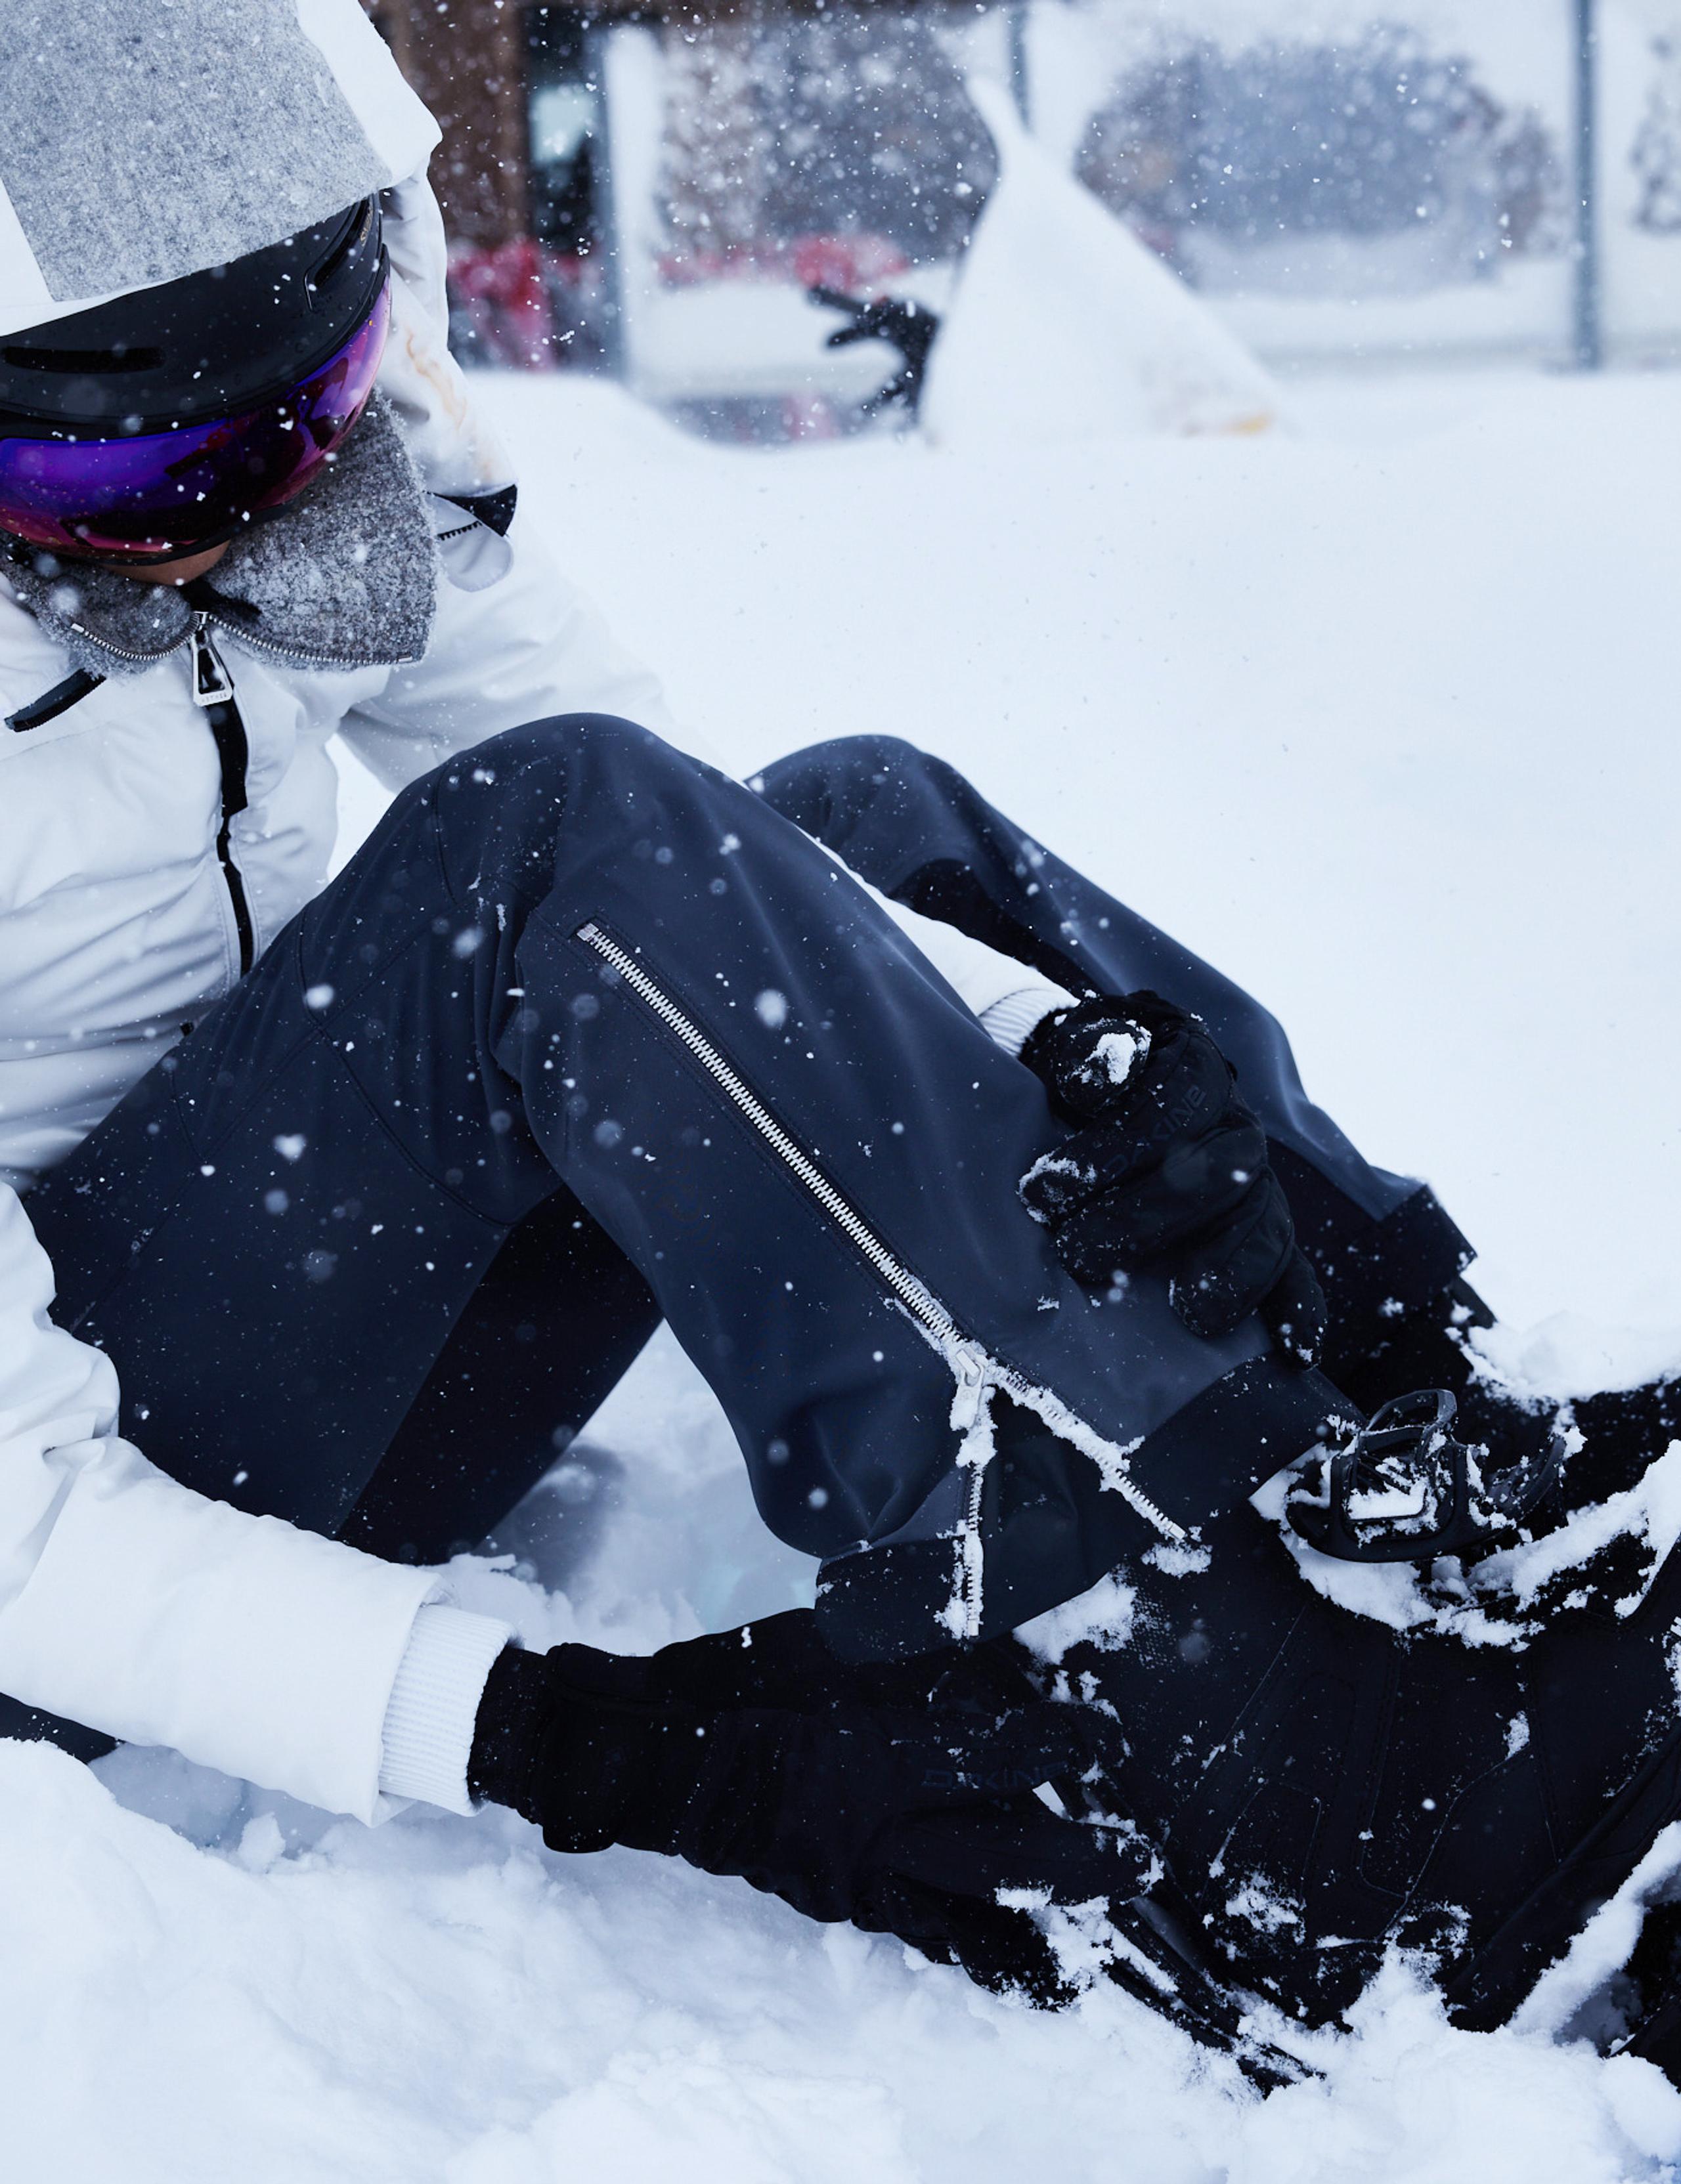 Women wearing Descent Snow Bib 2.0 getting ready to snowboard